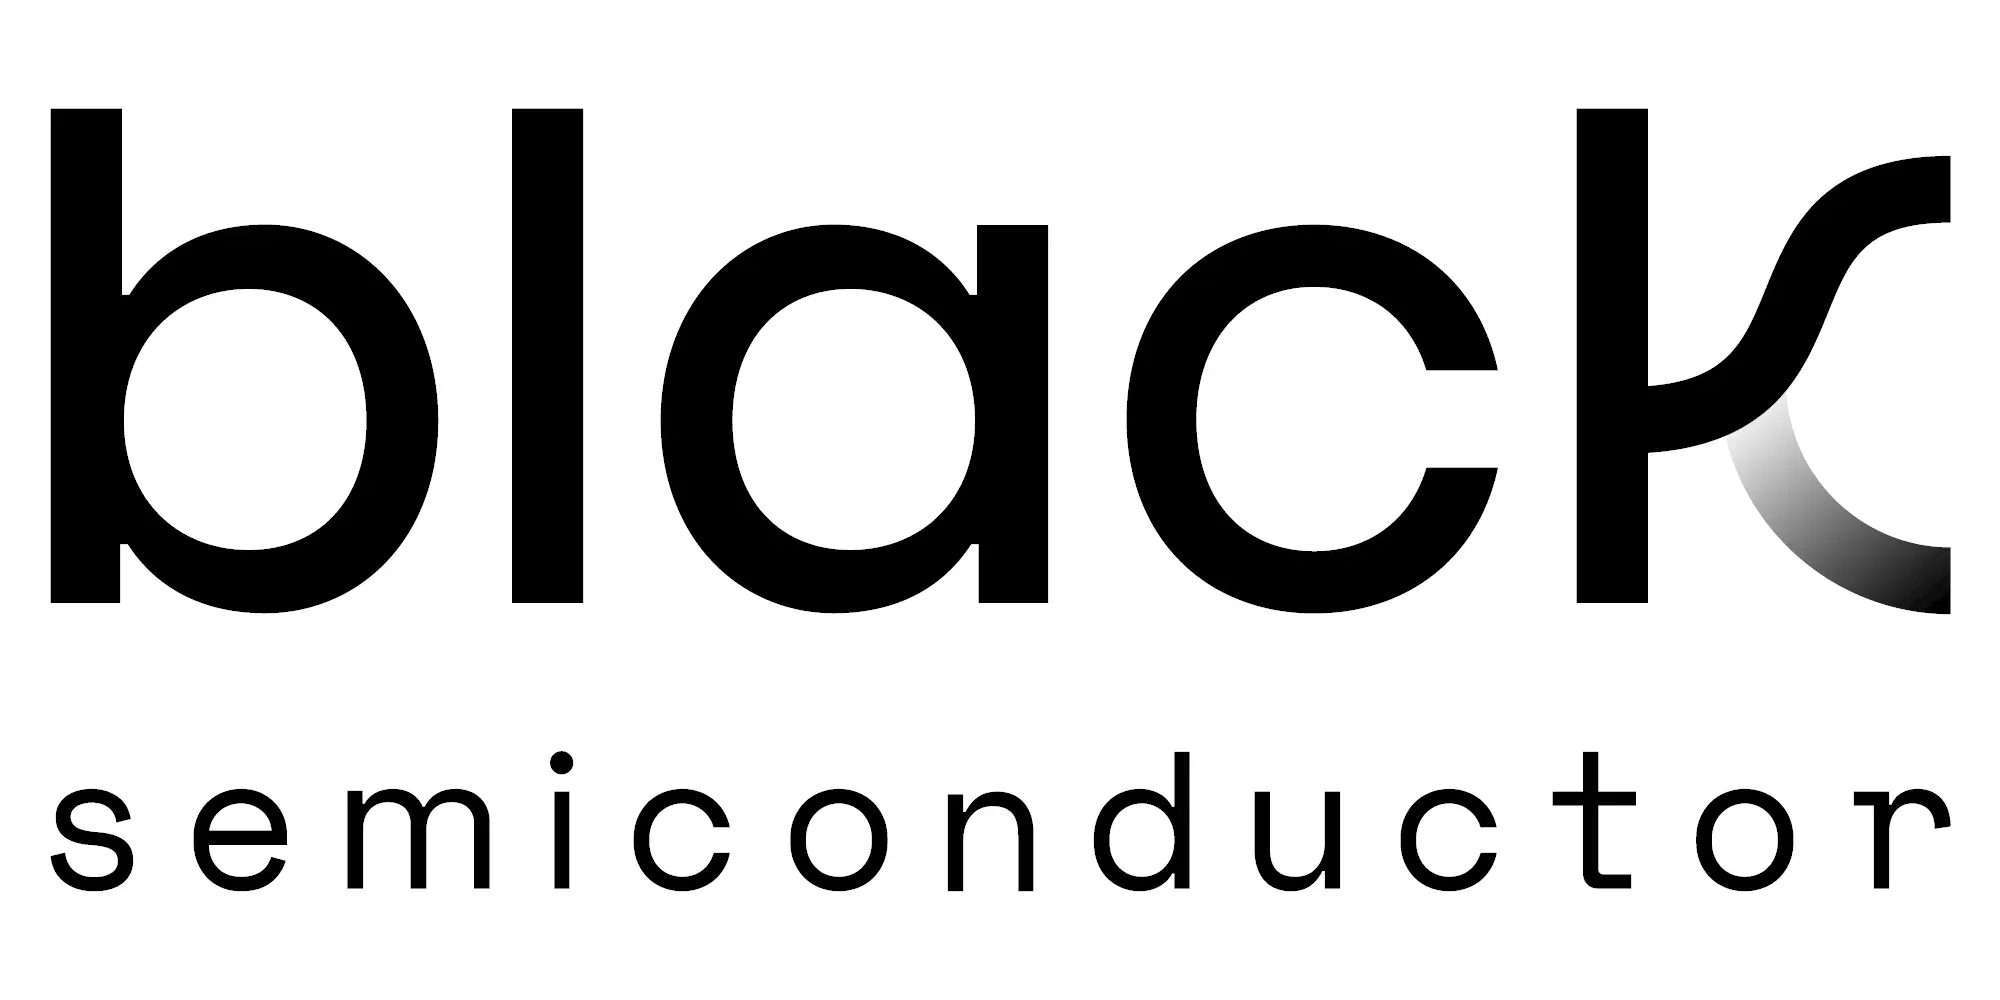 Black Semiconductor Logo